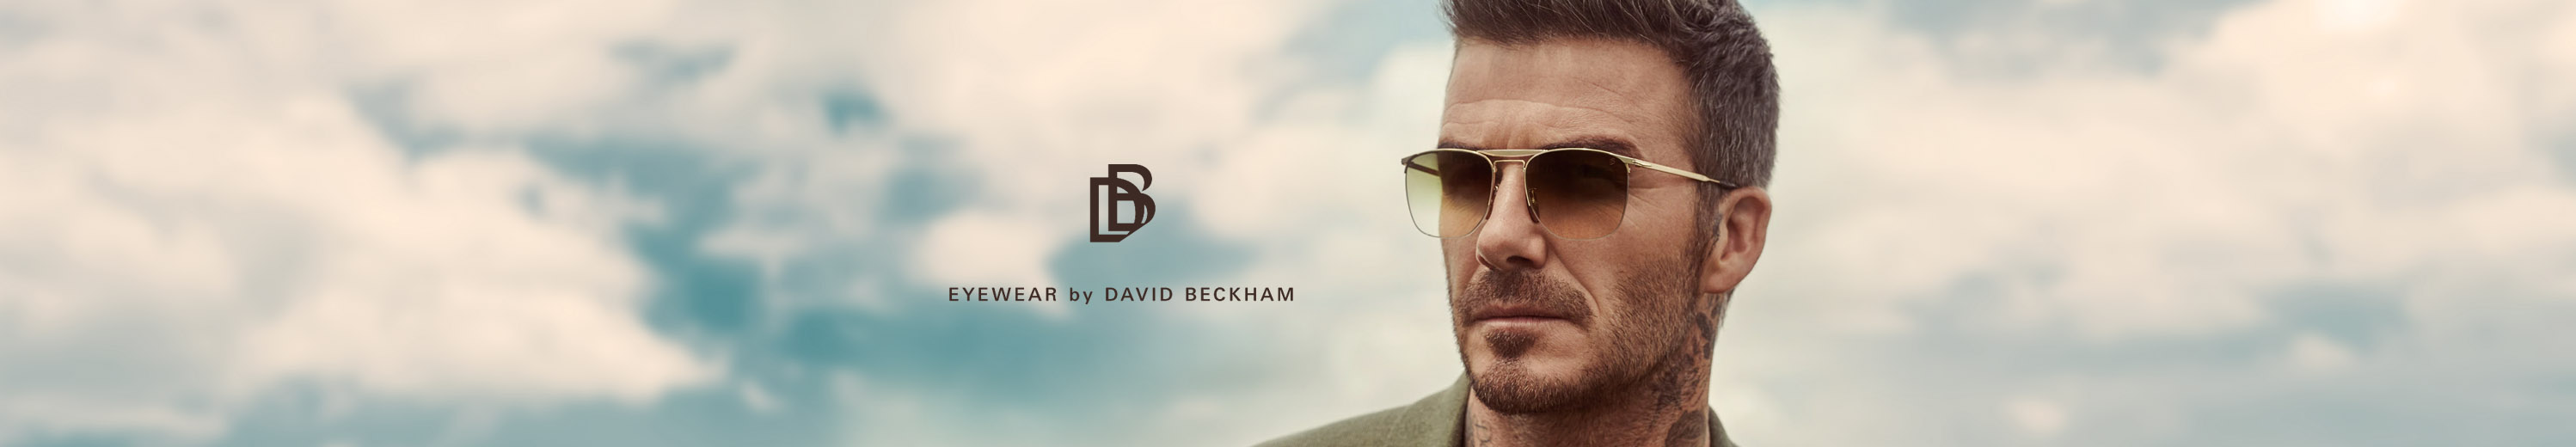 David Beckham Glasses and Eyewear